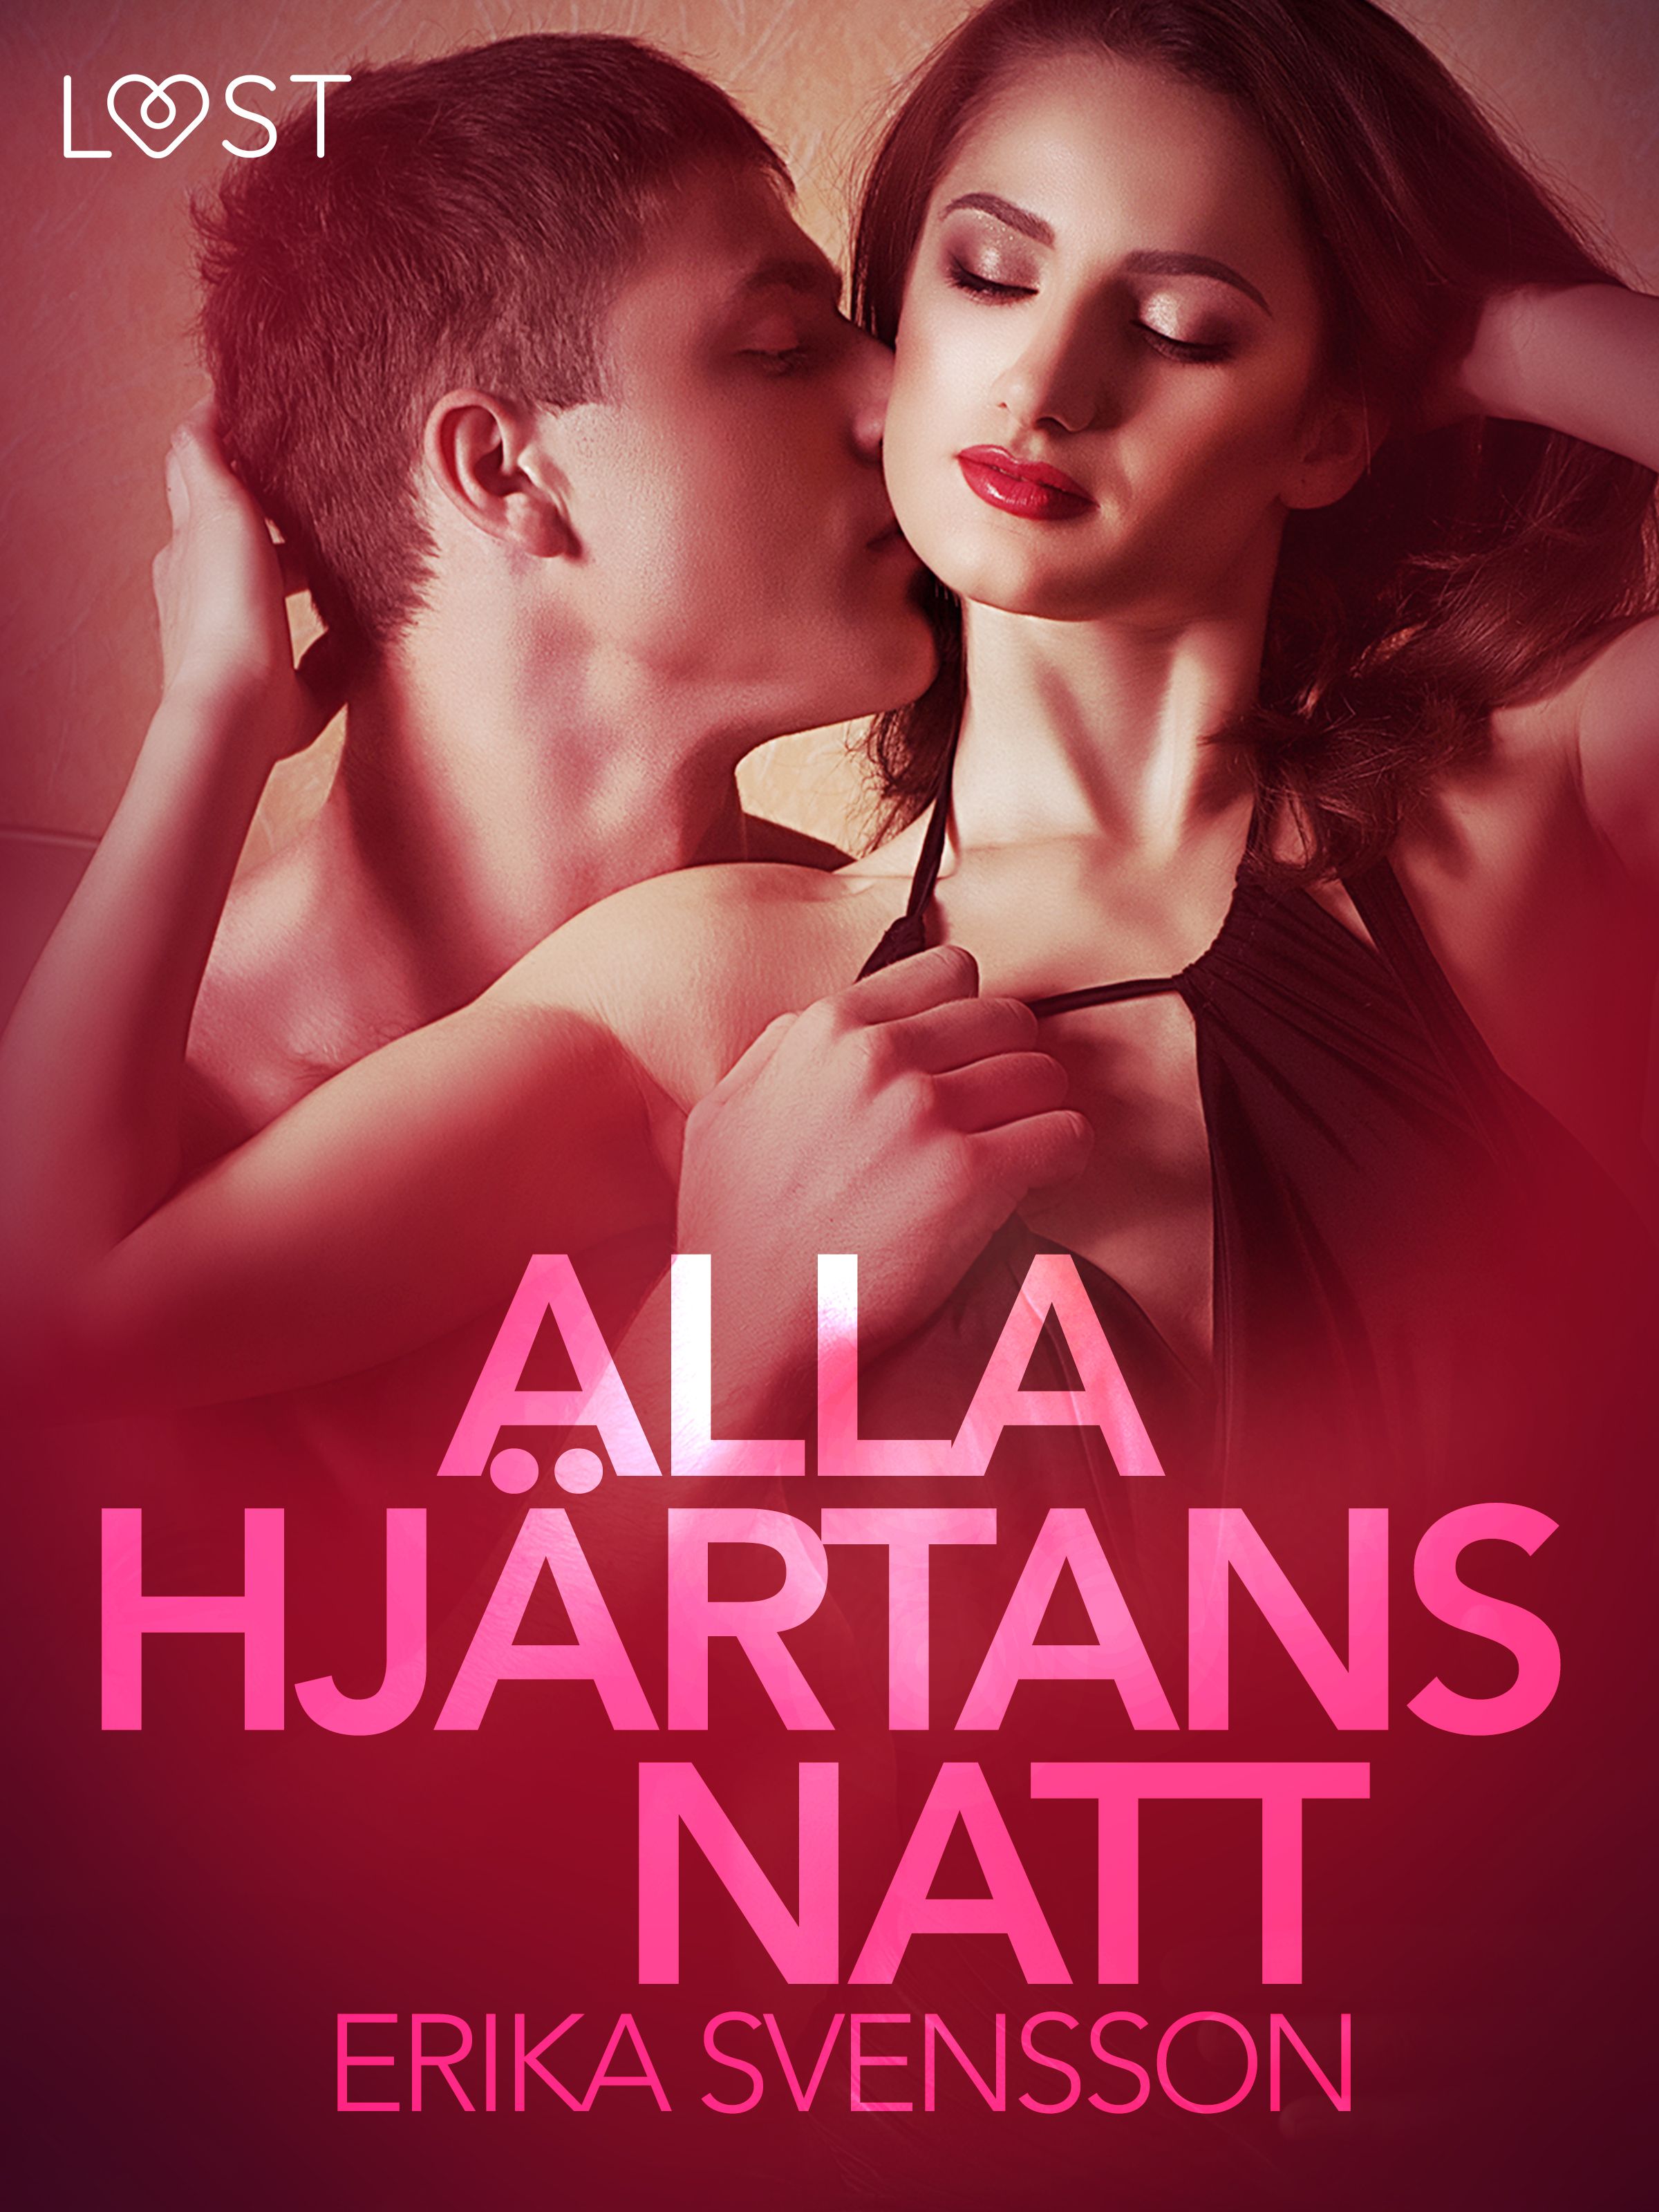 Alla hjärtans natt - erotisk novell, e-bok av Katja Slonawski